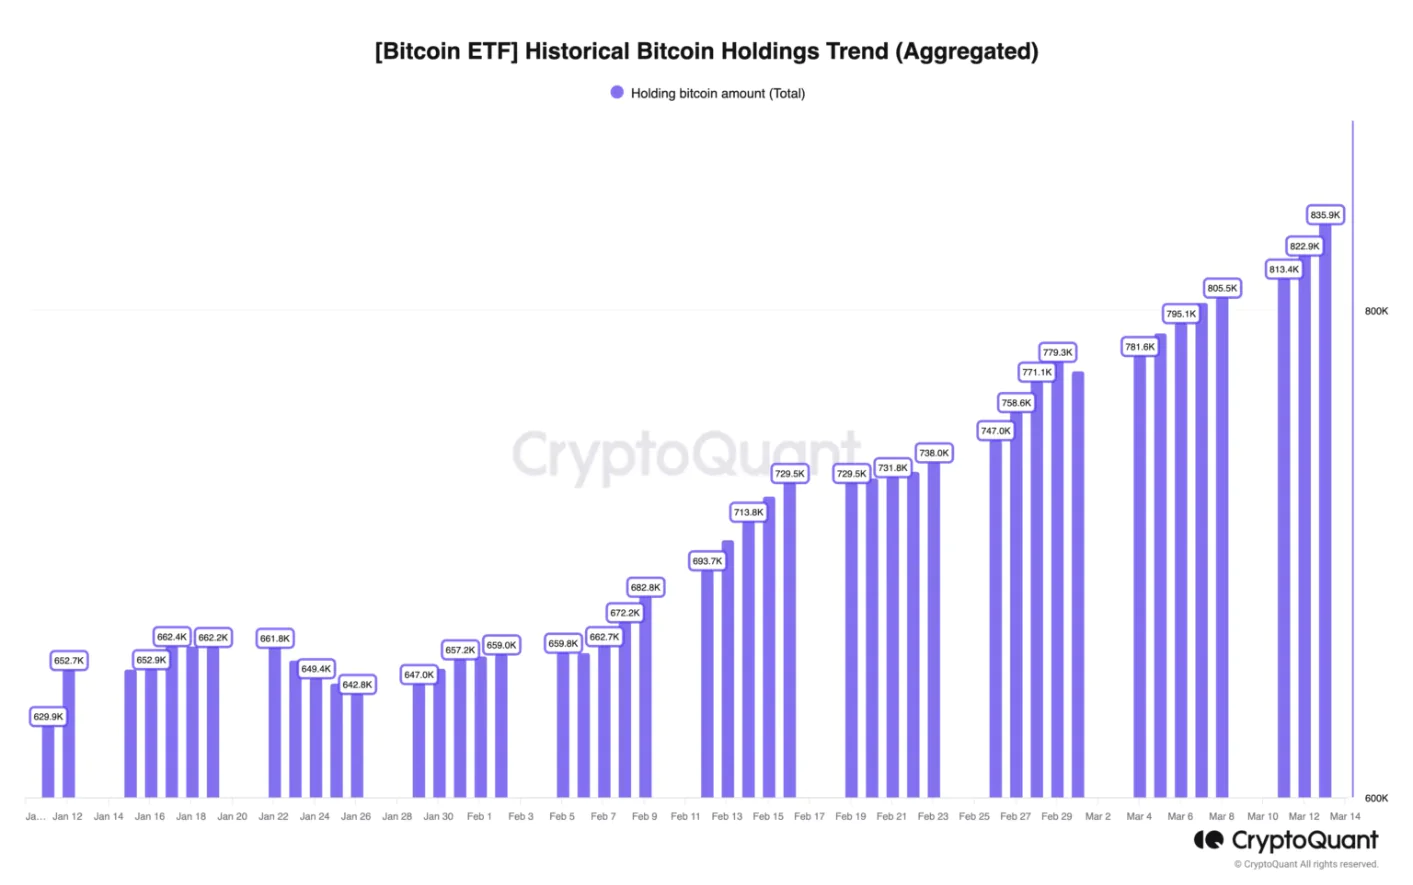 Bitcoin ETF Holdings Nguon CryptoQuant